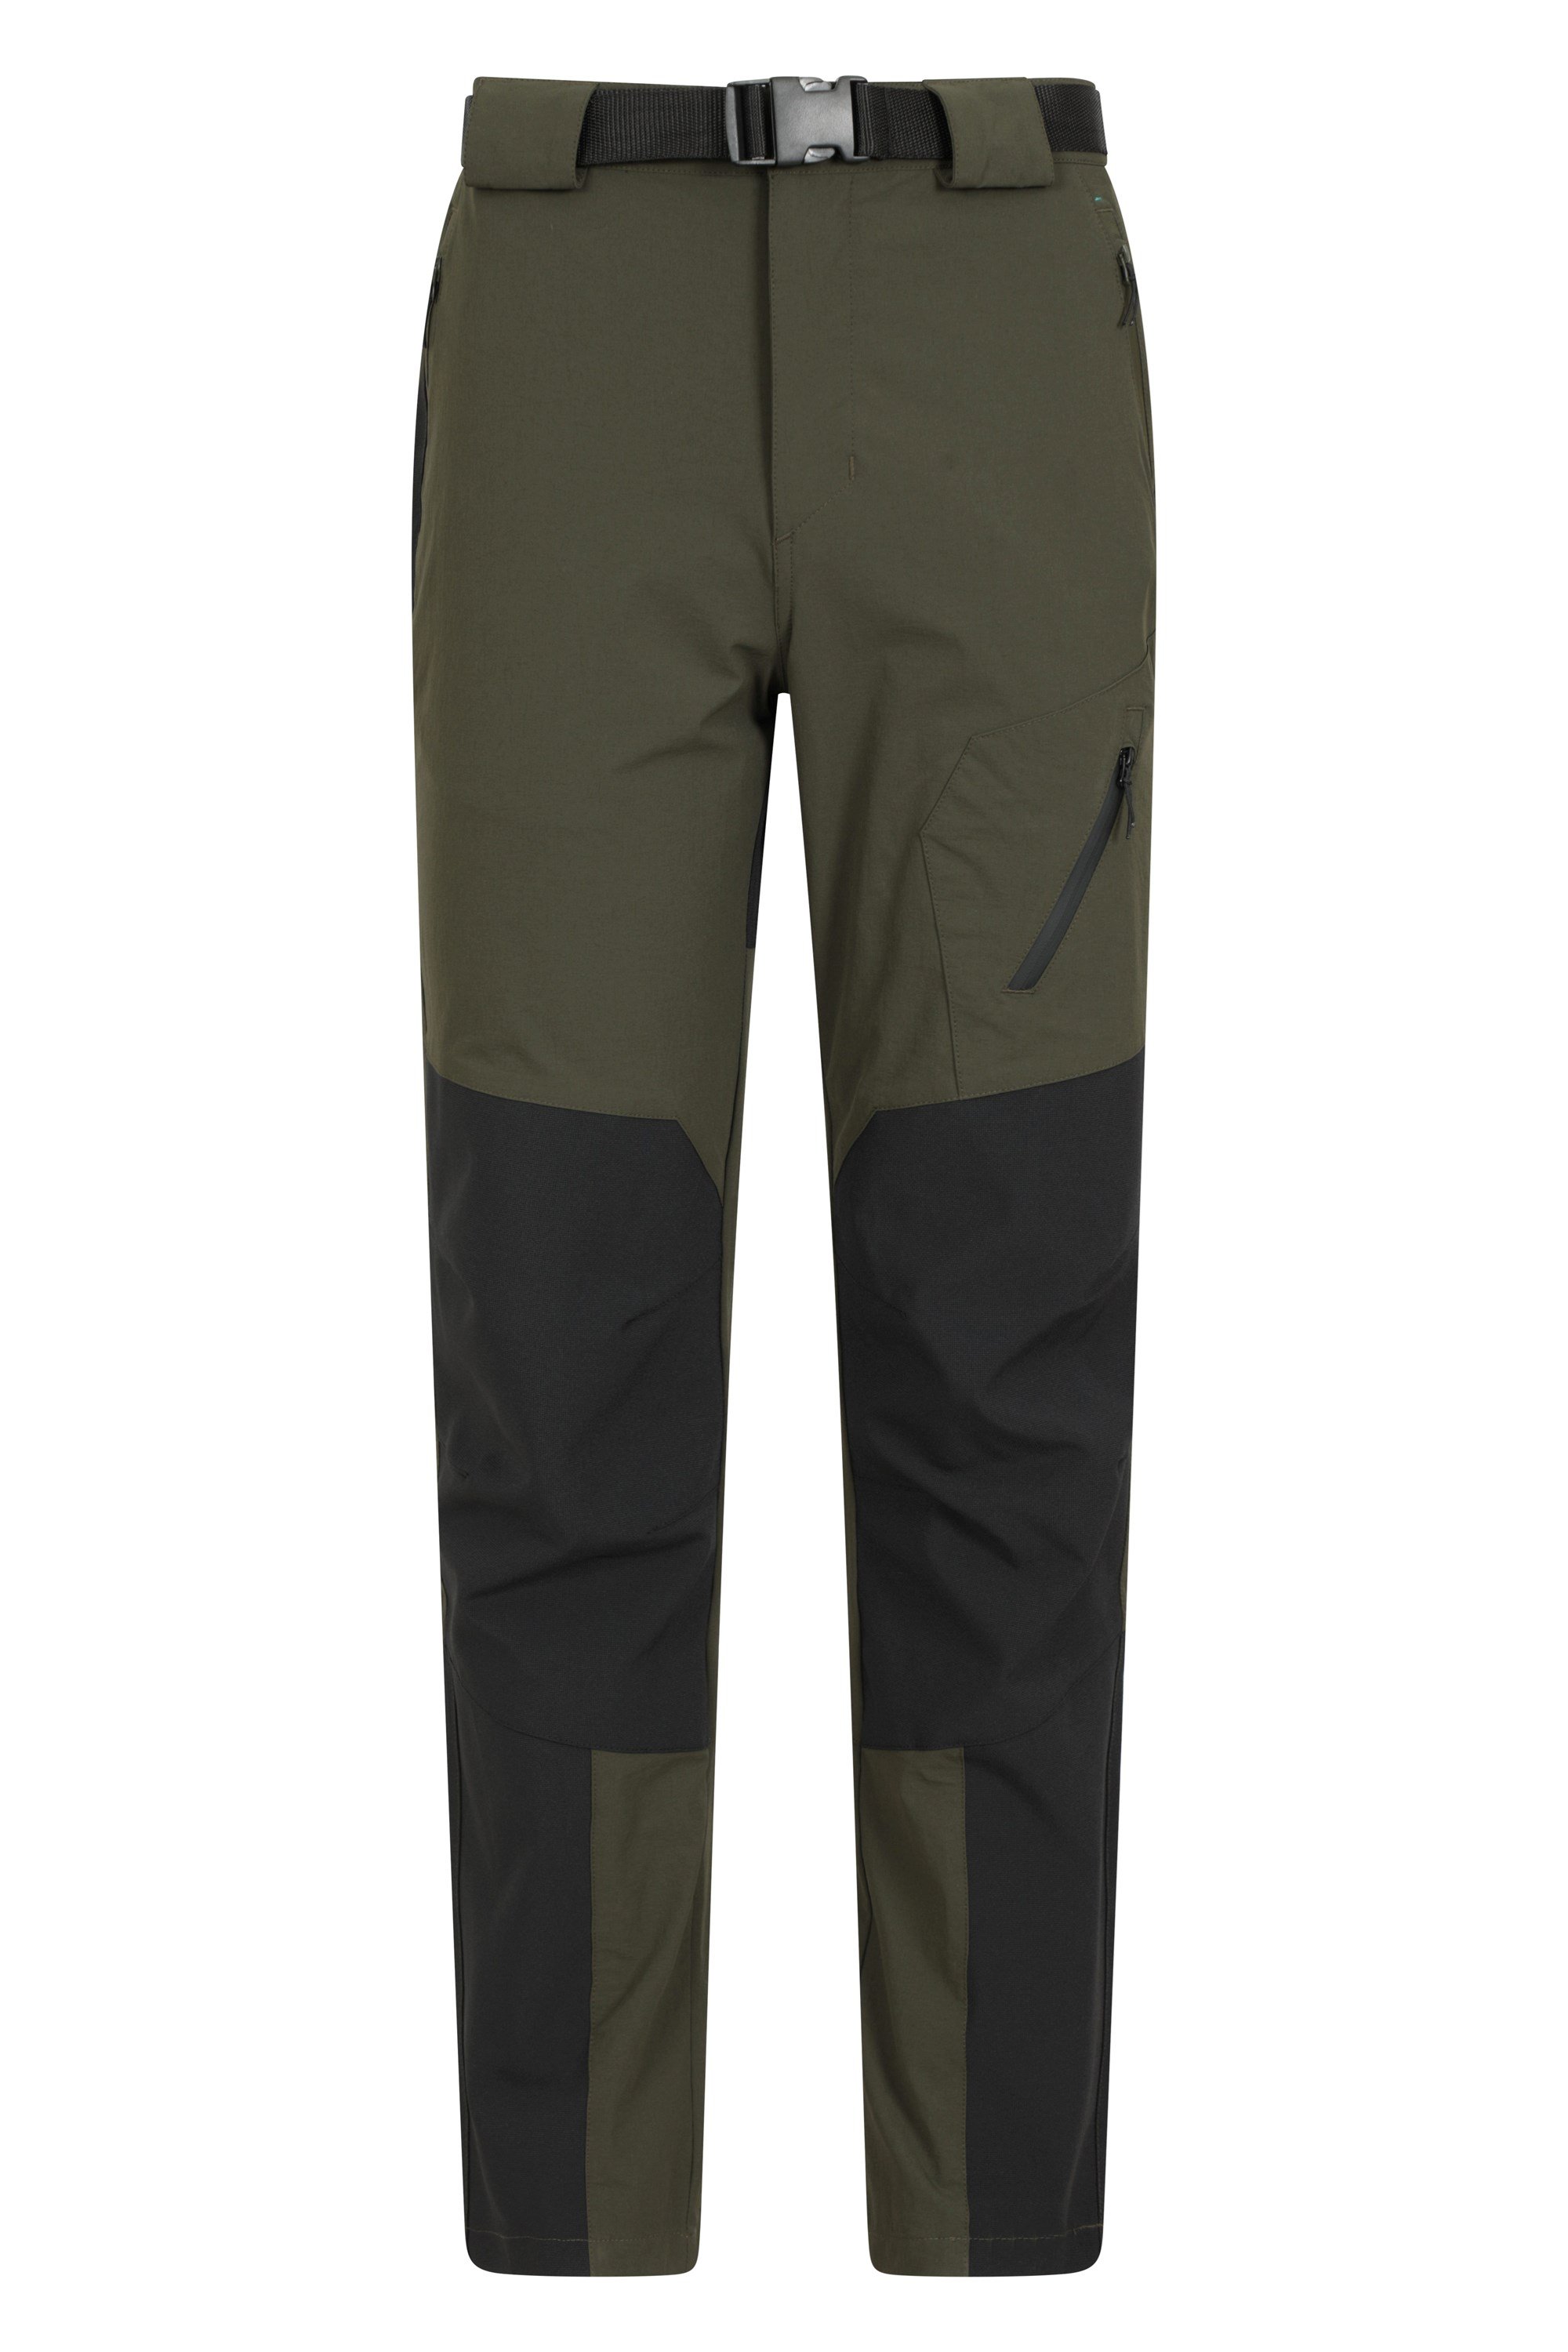 Forest Mens Trekking Trousers - Short Length - Green